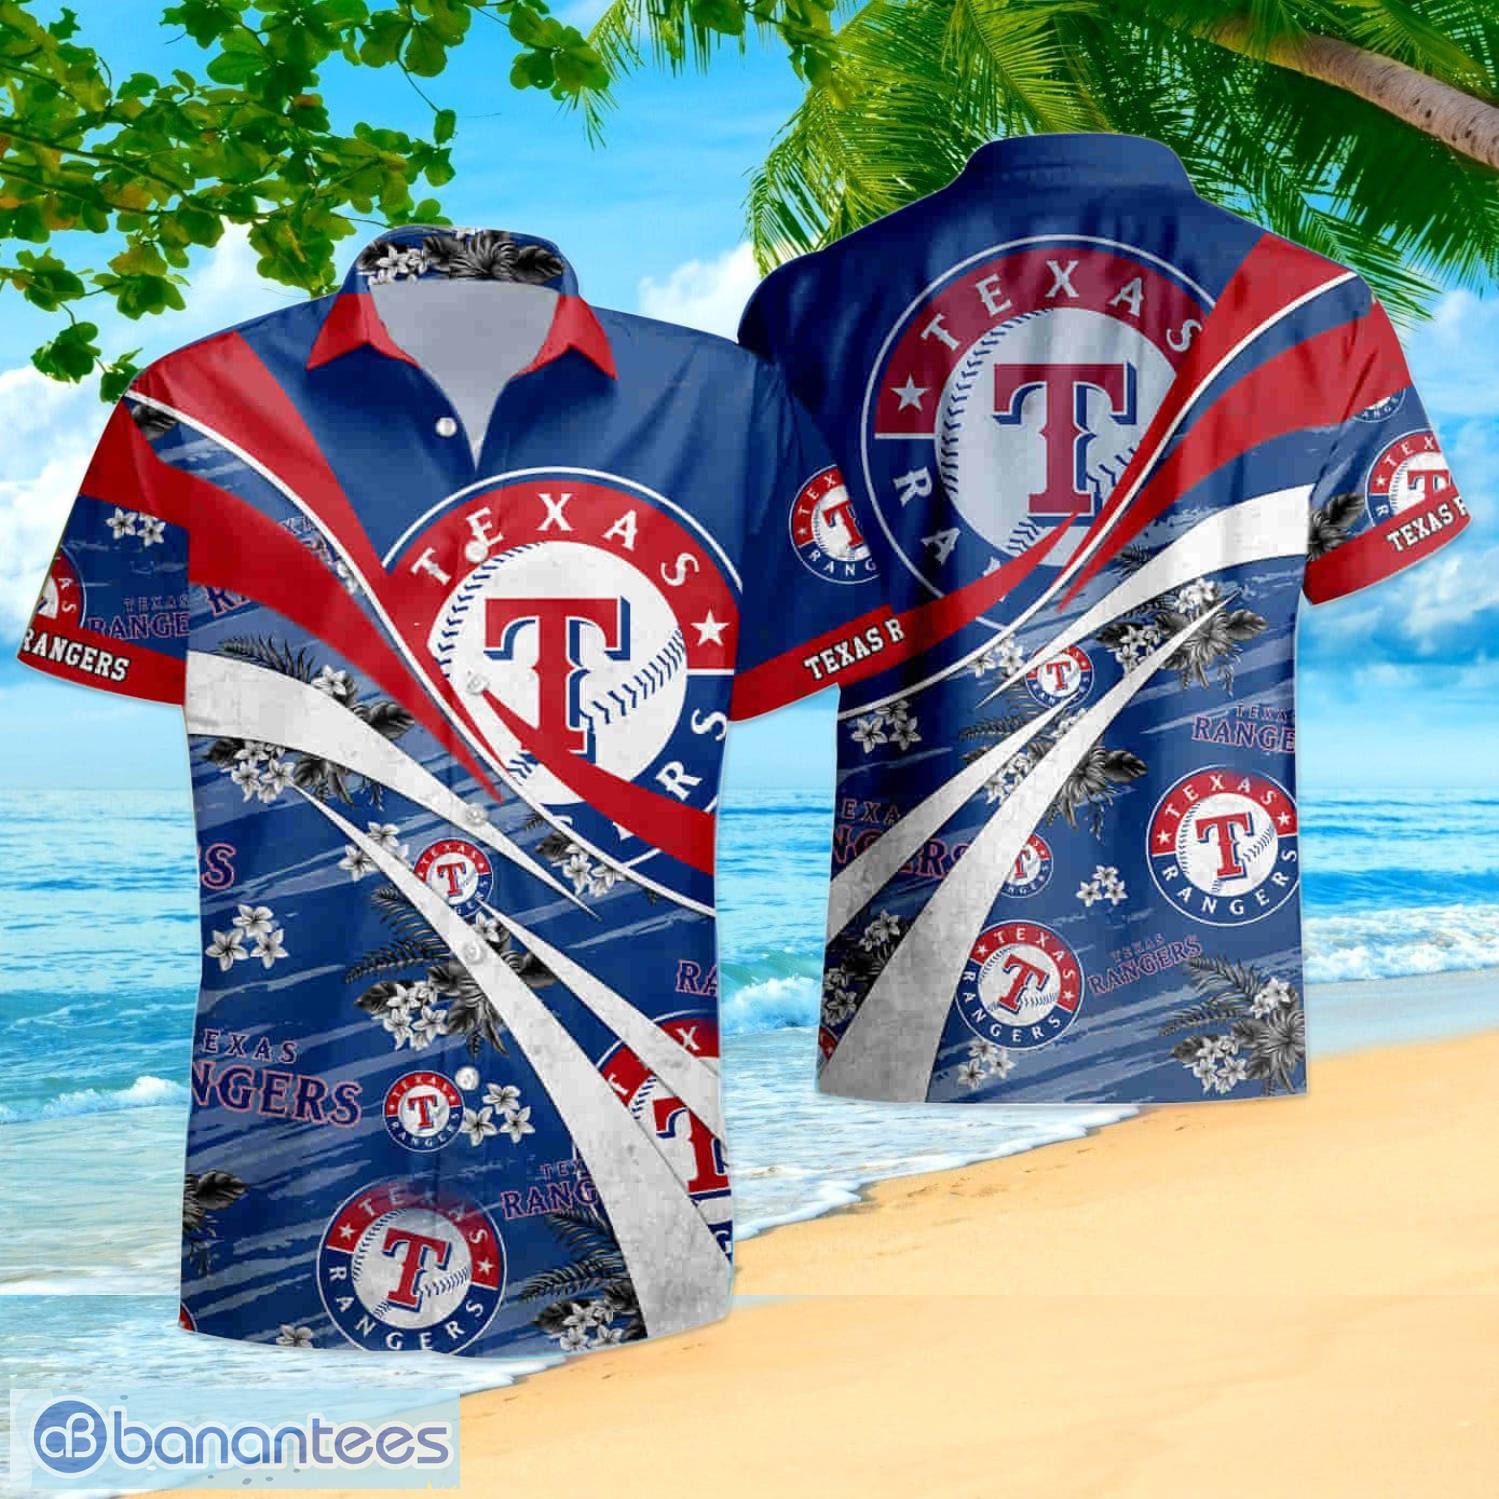 Texas Rangers MLB For Sports Fan All Over Printed Hawaiian Style